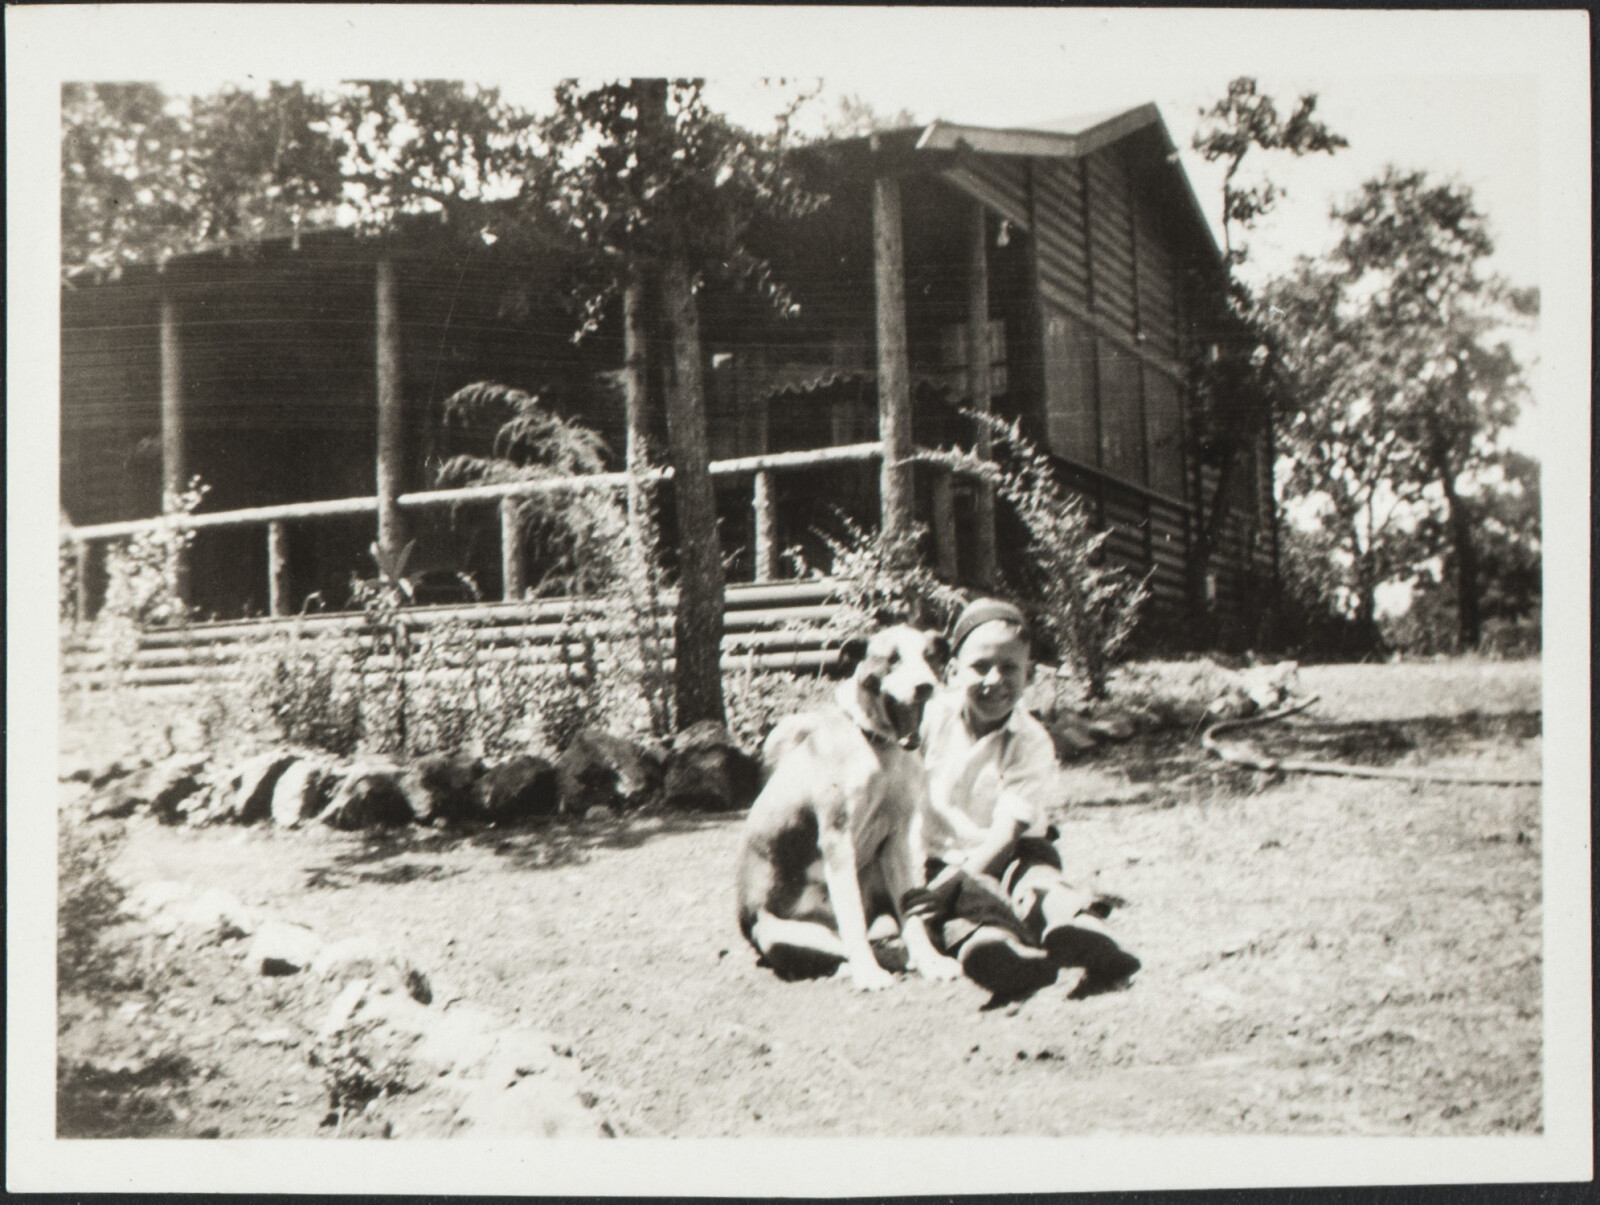 Young Diebenkorn Photographs